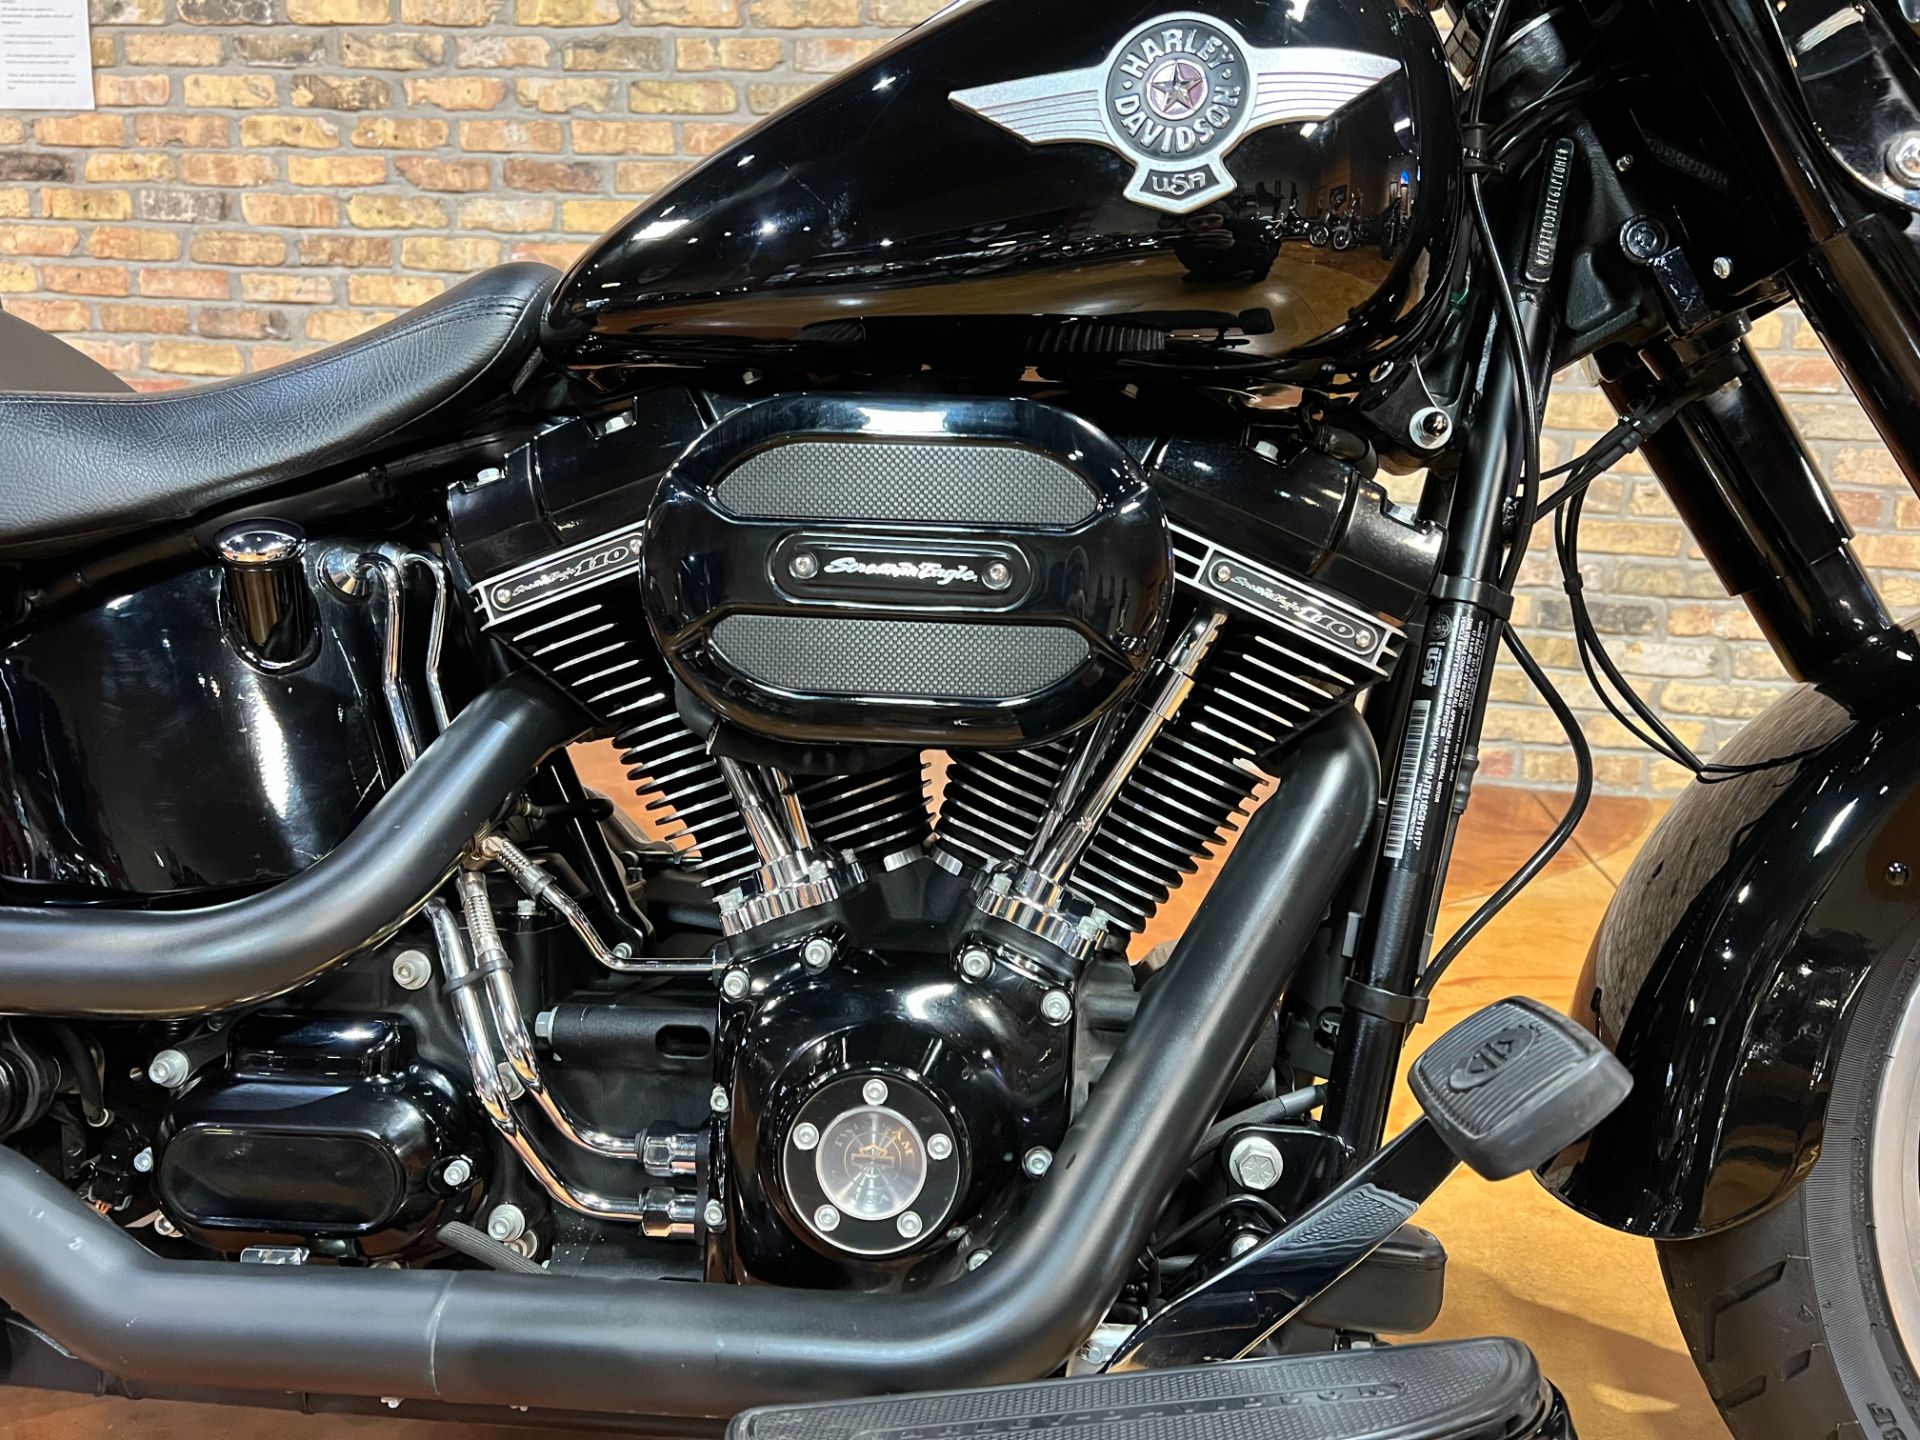 2016 Harley-Davidson Fat Boy® S in Big Bend, Wisconsin - Photo 7